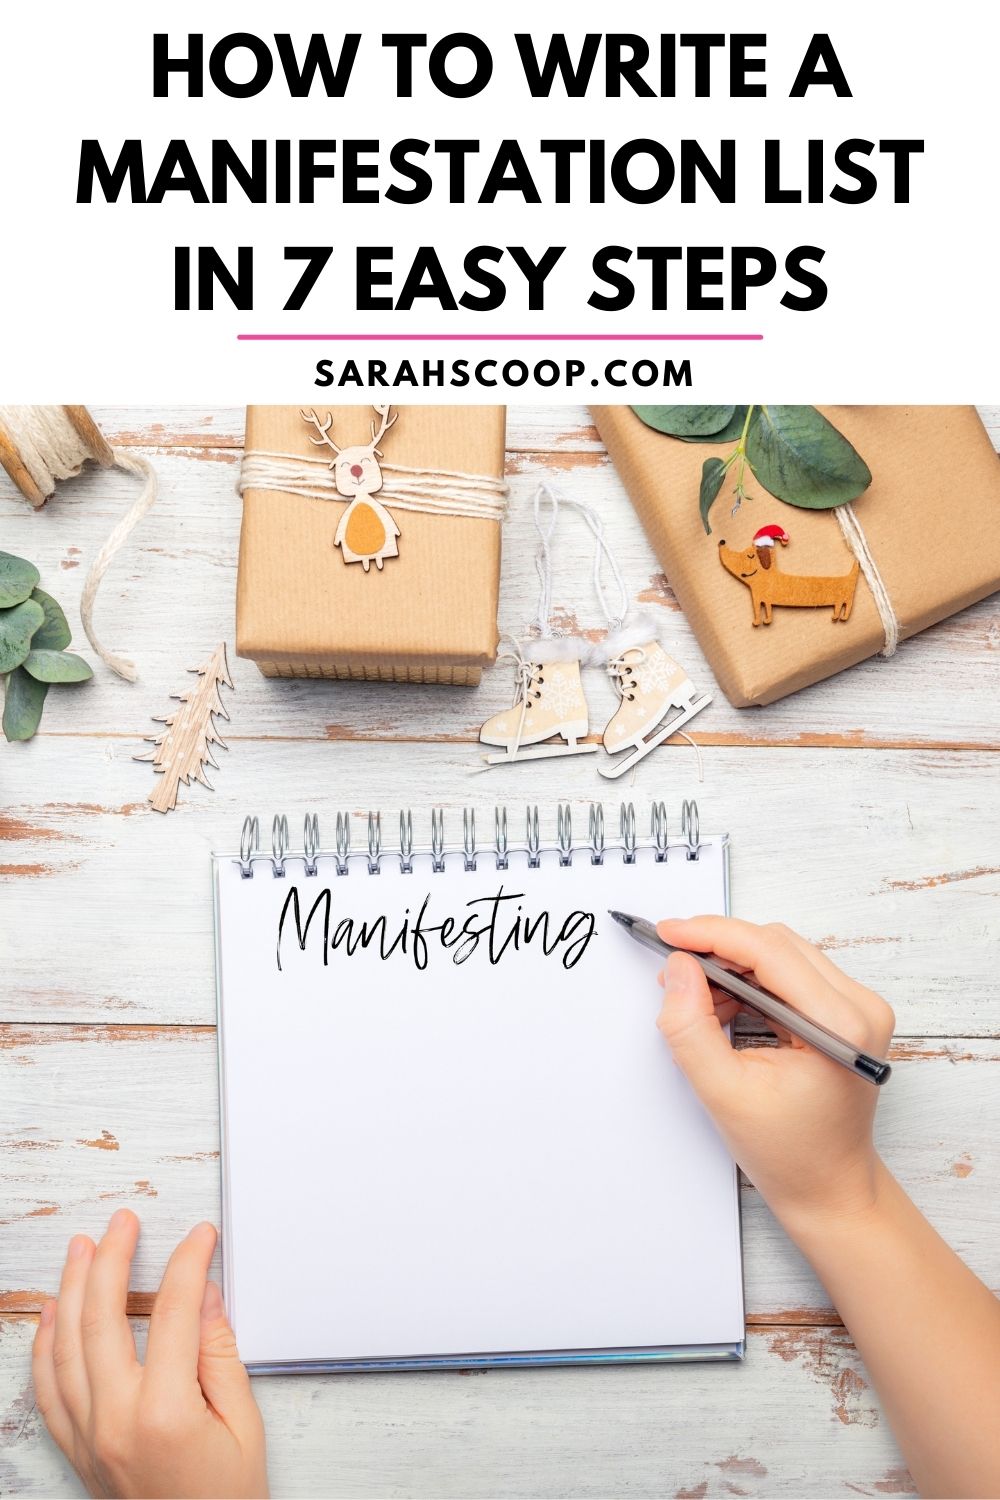 How do you start a manifestation list?